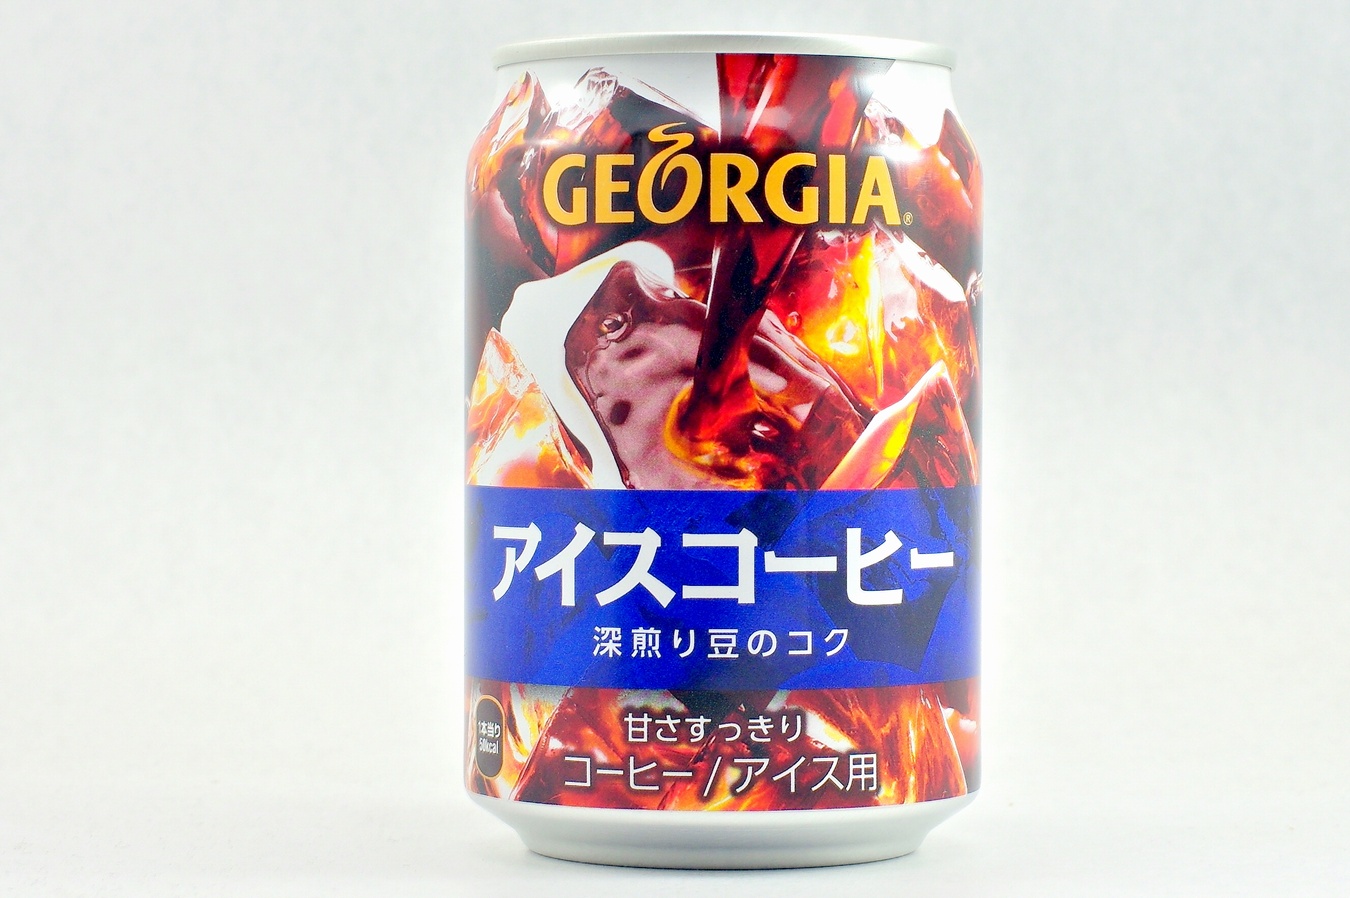 GEORGIA アイスコーヒー アルミ缶 2015年4月